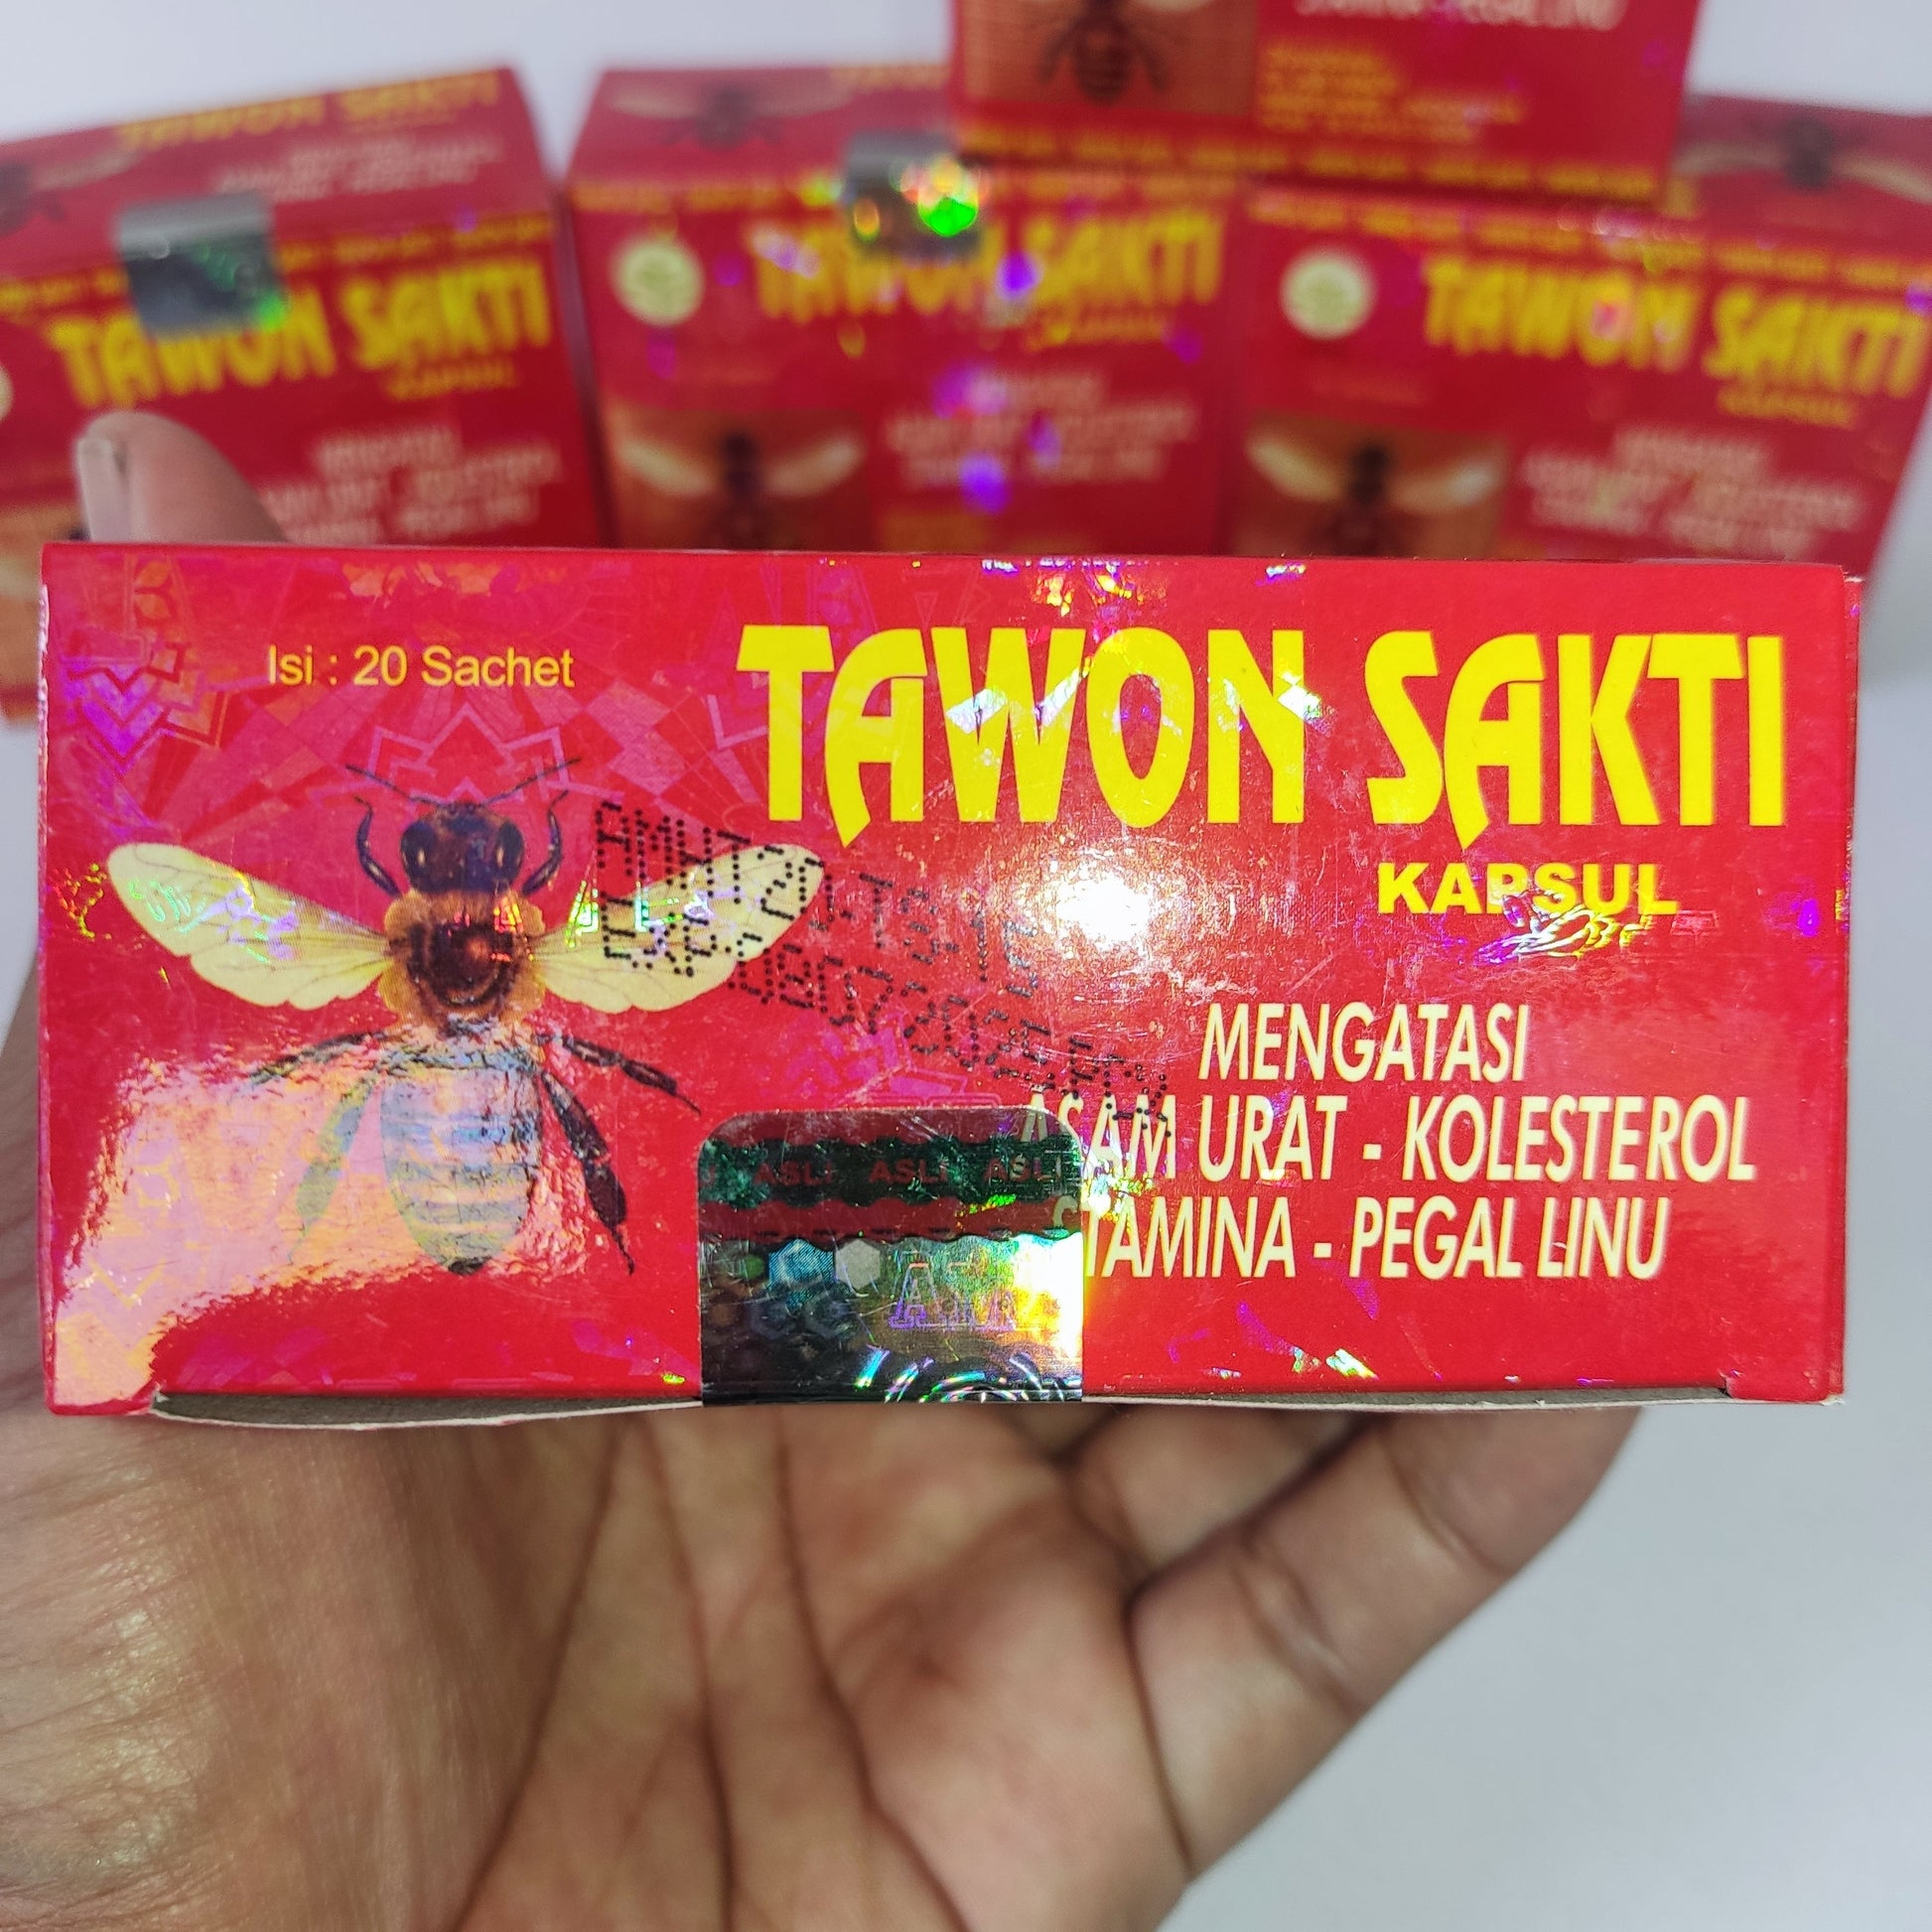 TAWON SAKTI Original Guarantee 100% Arthritis Gout Muscle Indonesian Herb